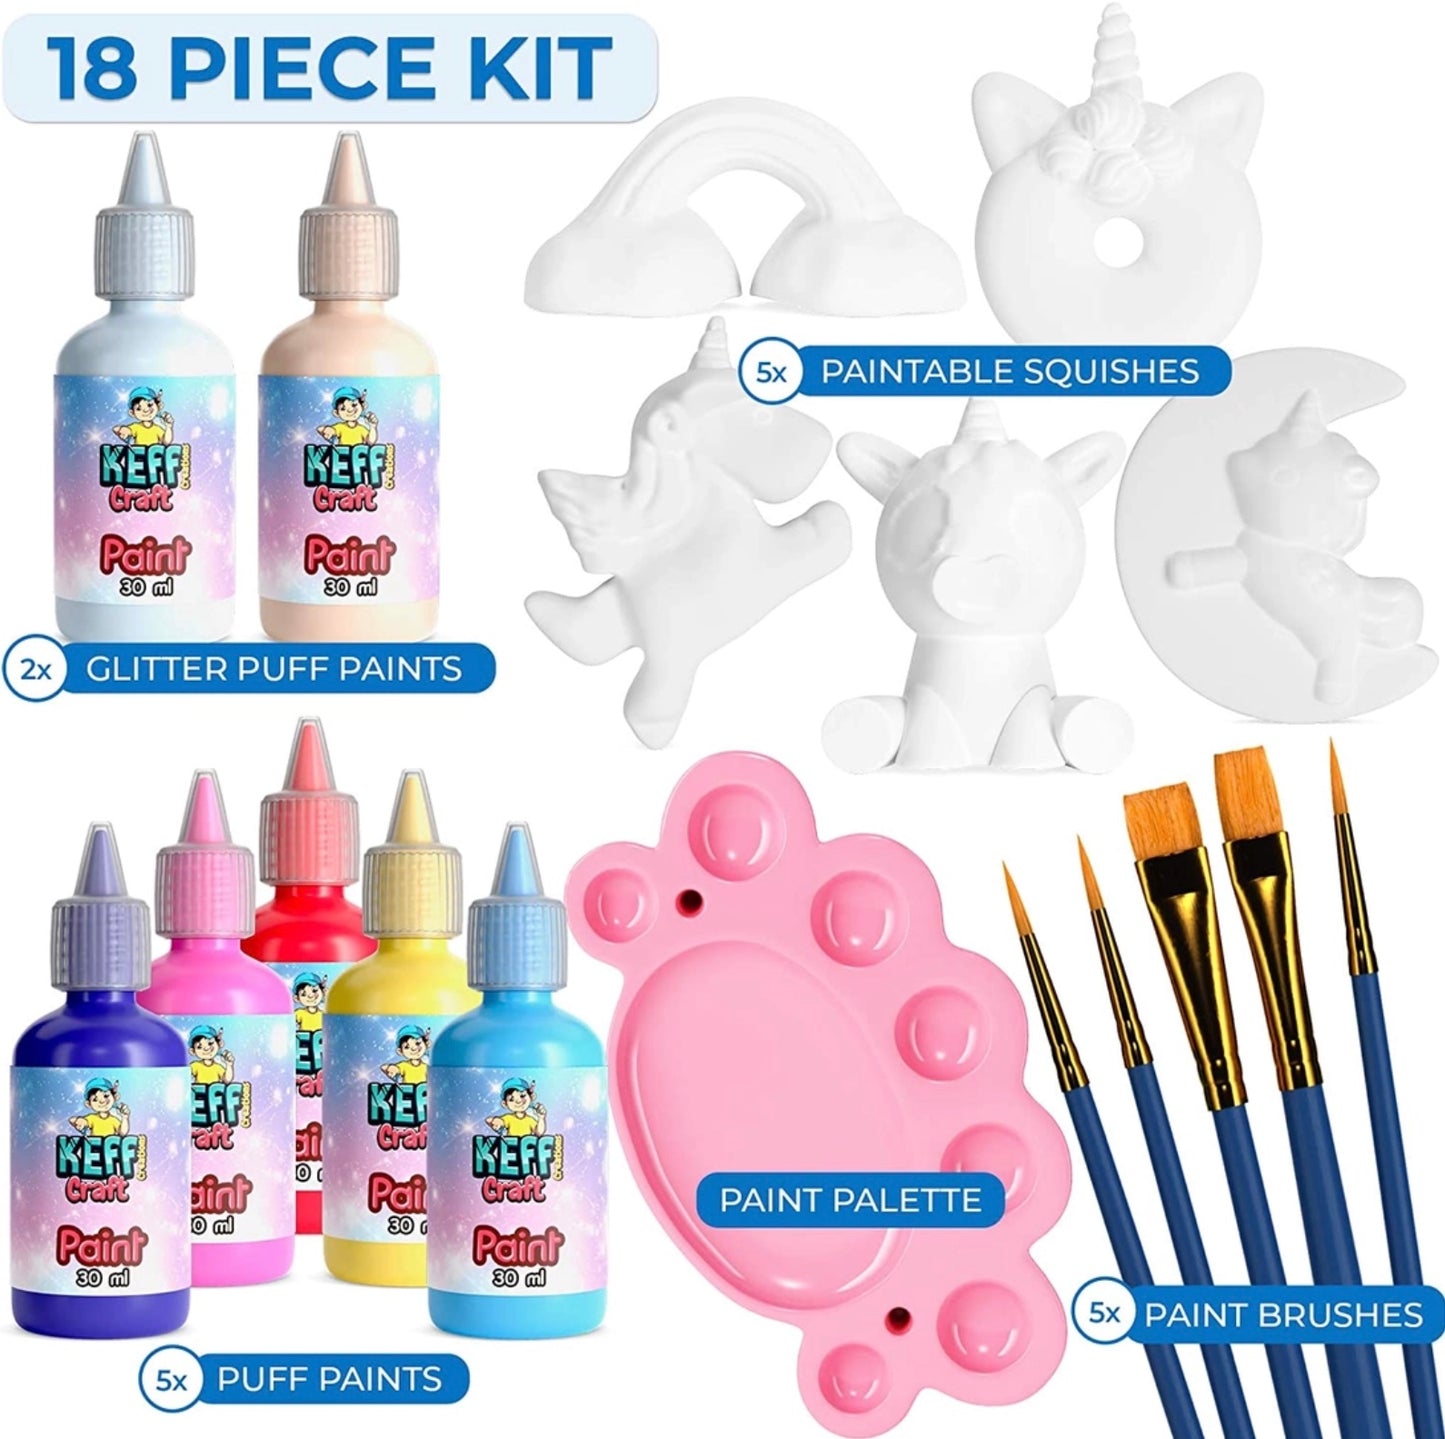 BUILD A PARTY: Make it a Unicorn paint party. Unicorn Painting Kit